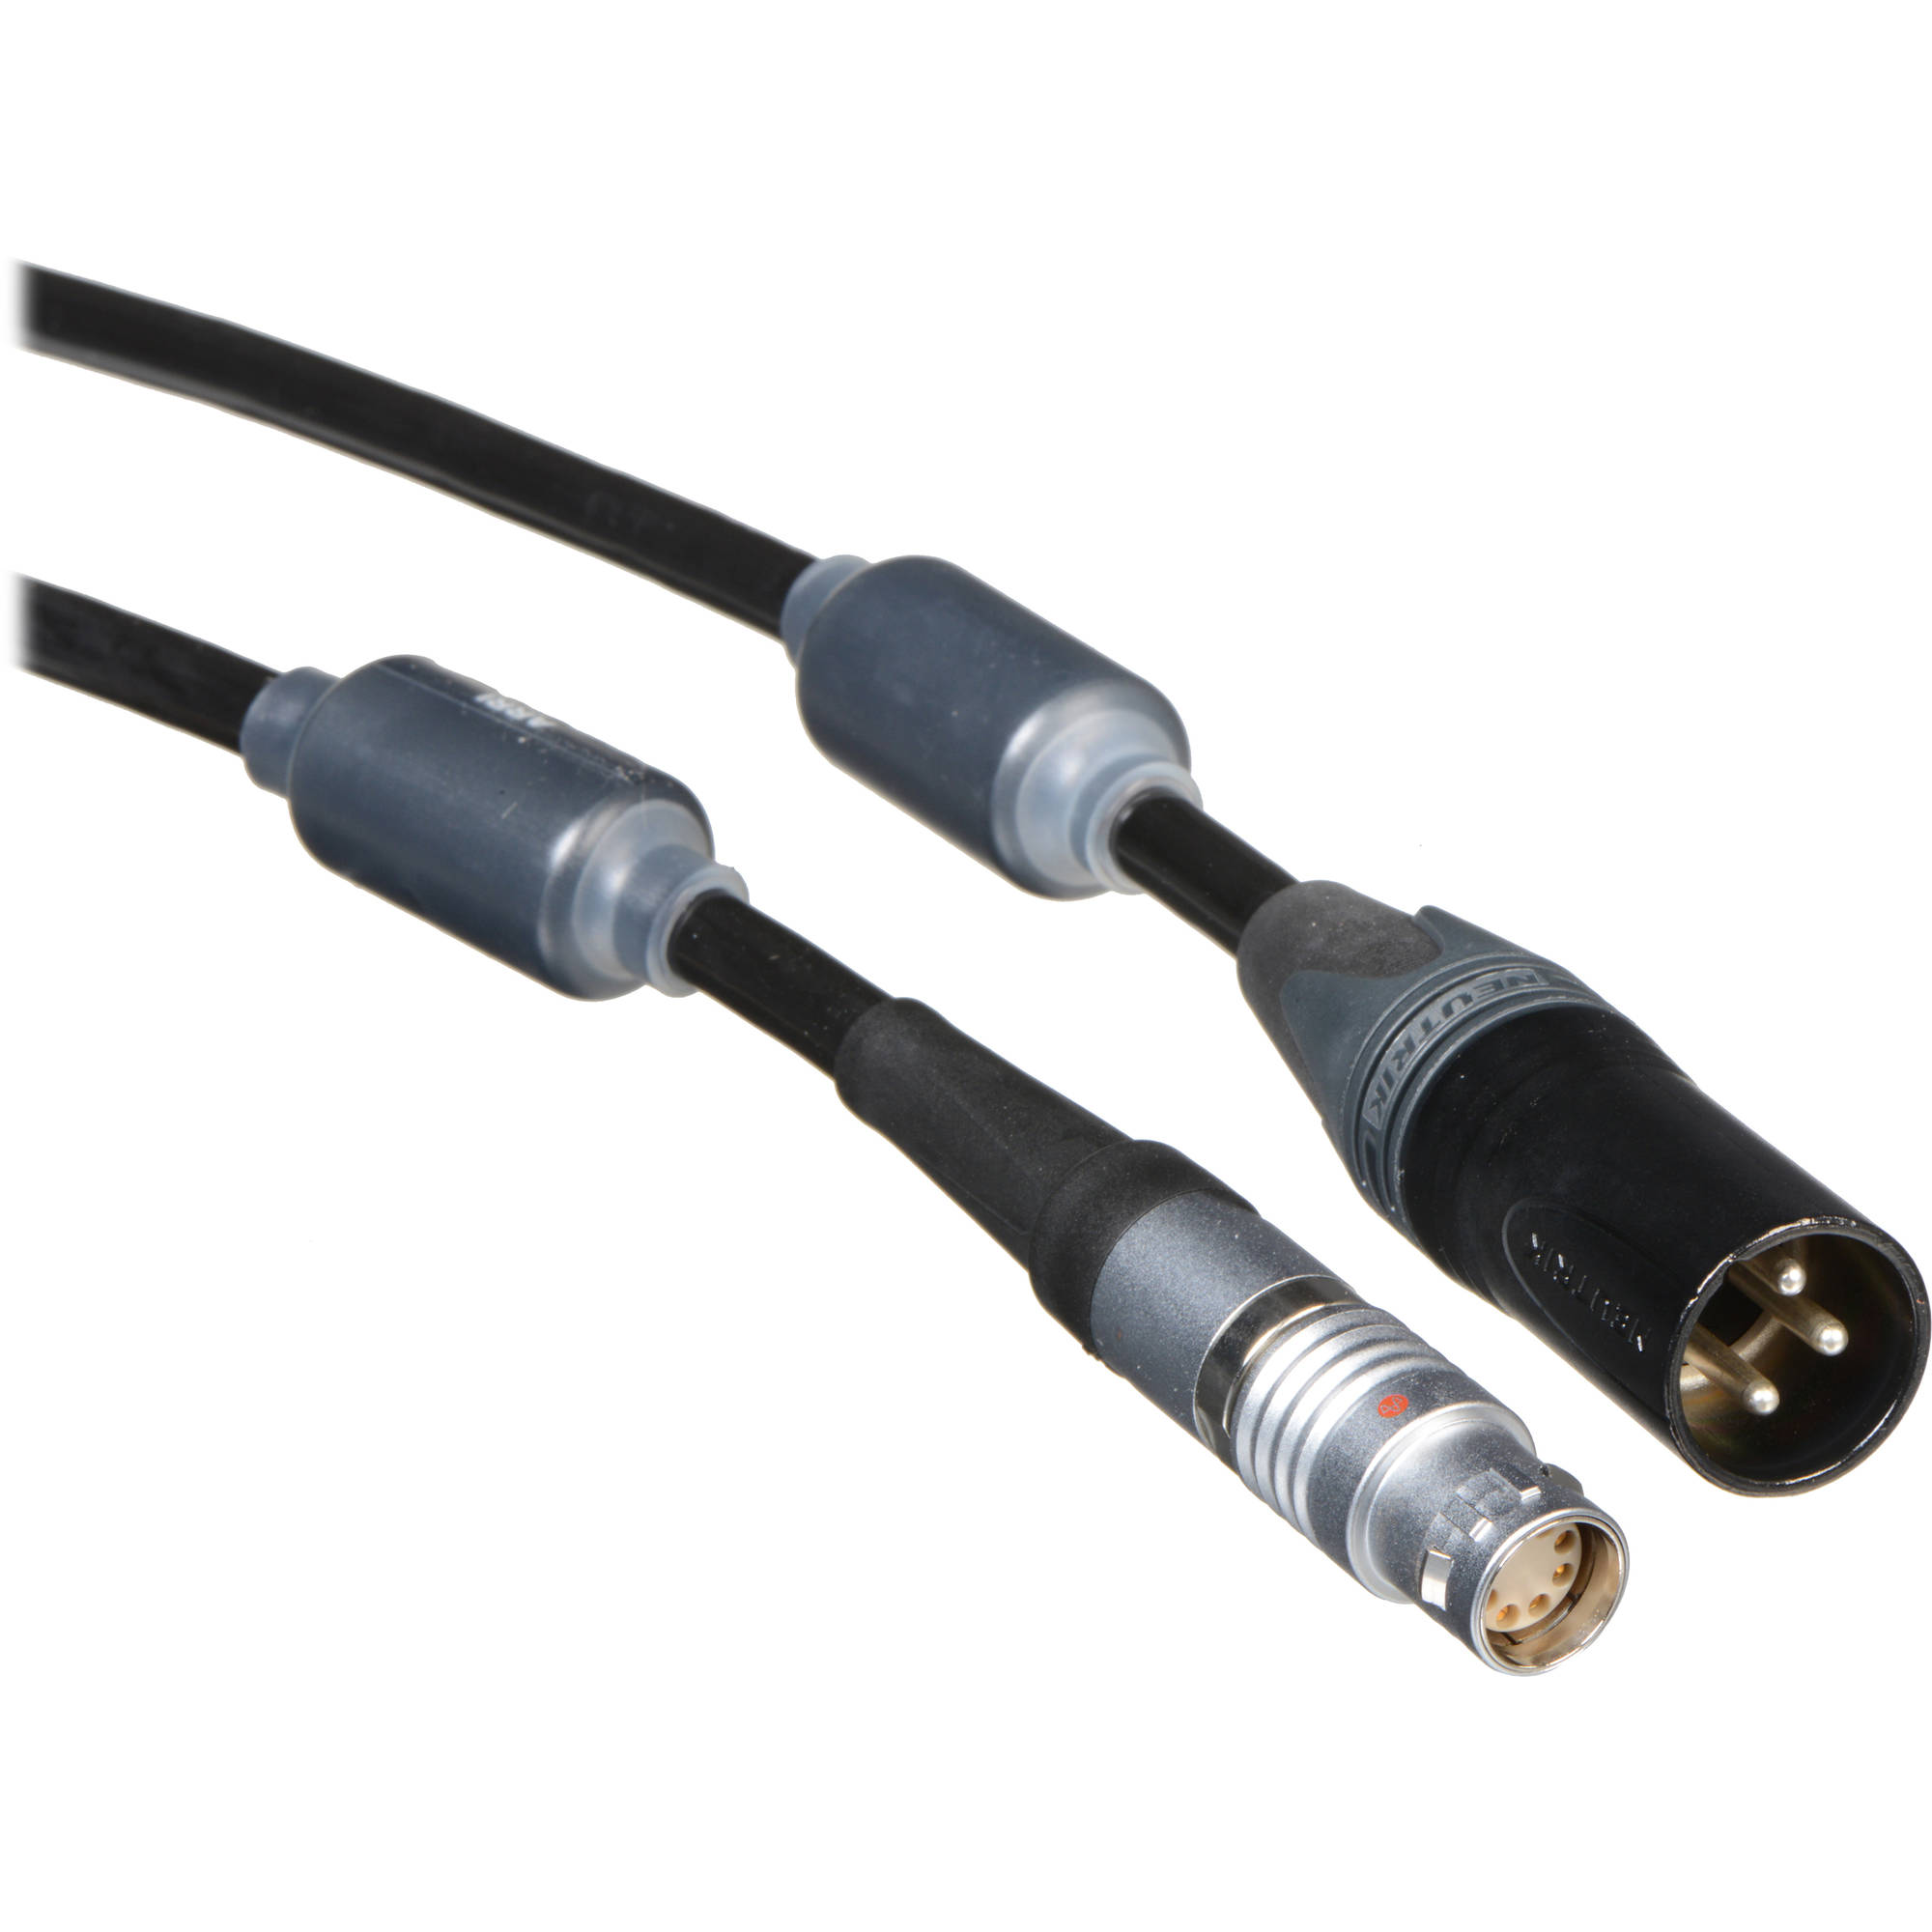 0,5m Battery Cable Negative Cable 25mm² Black Car Power Cable 2x polklemme 50cm